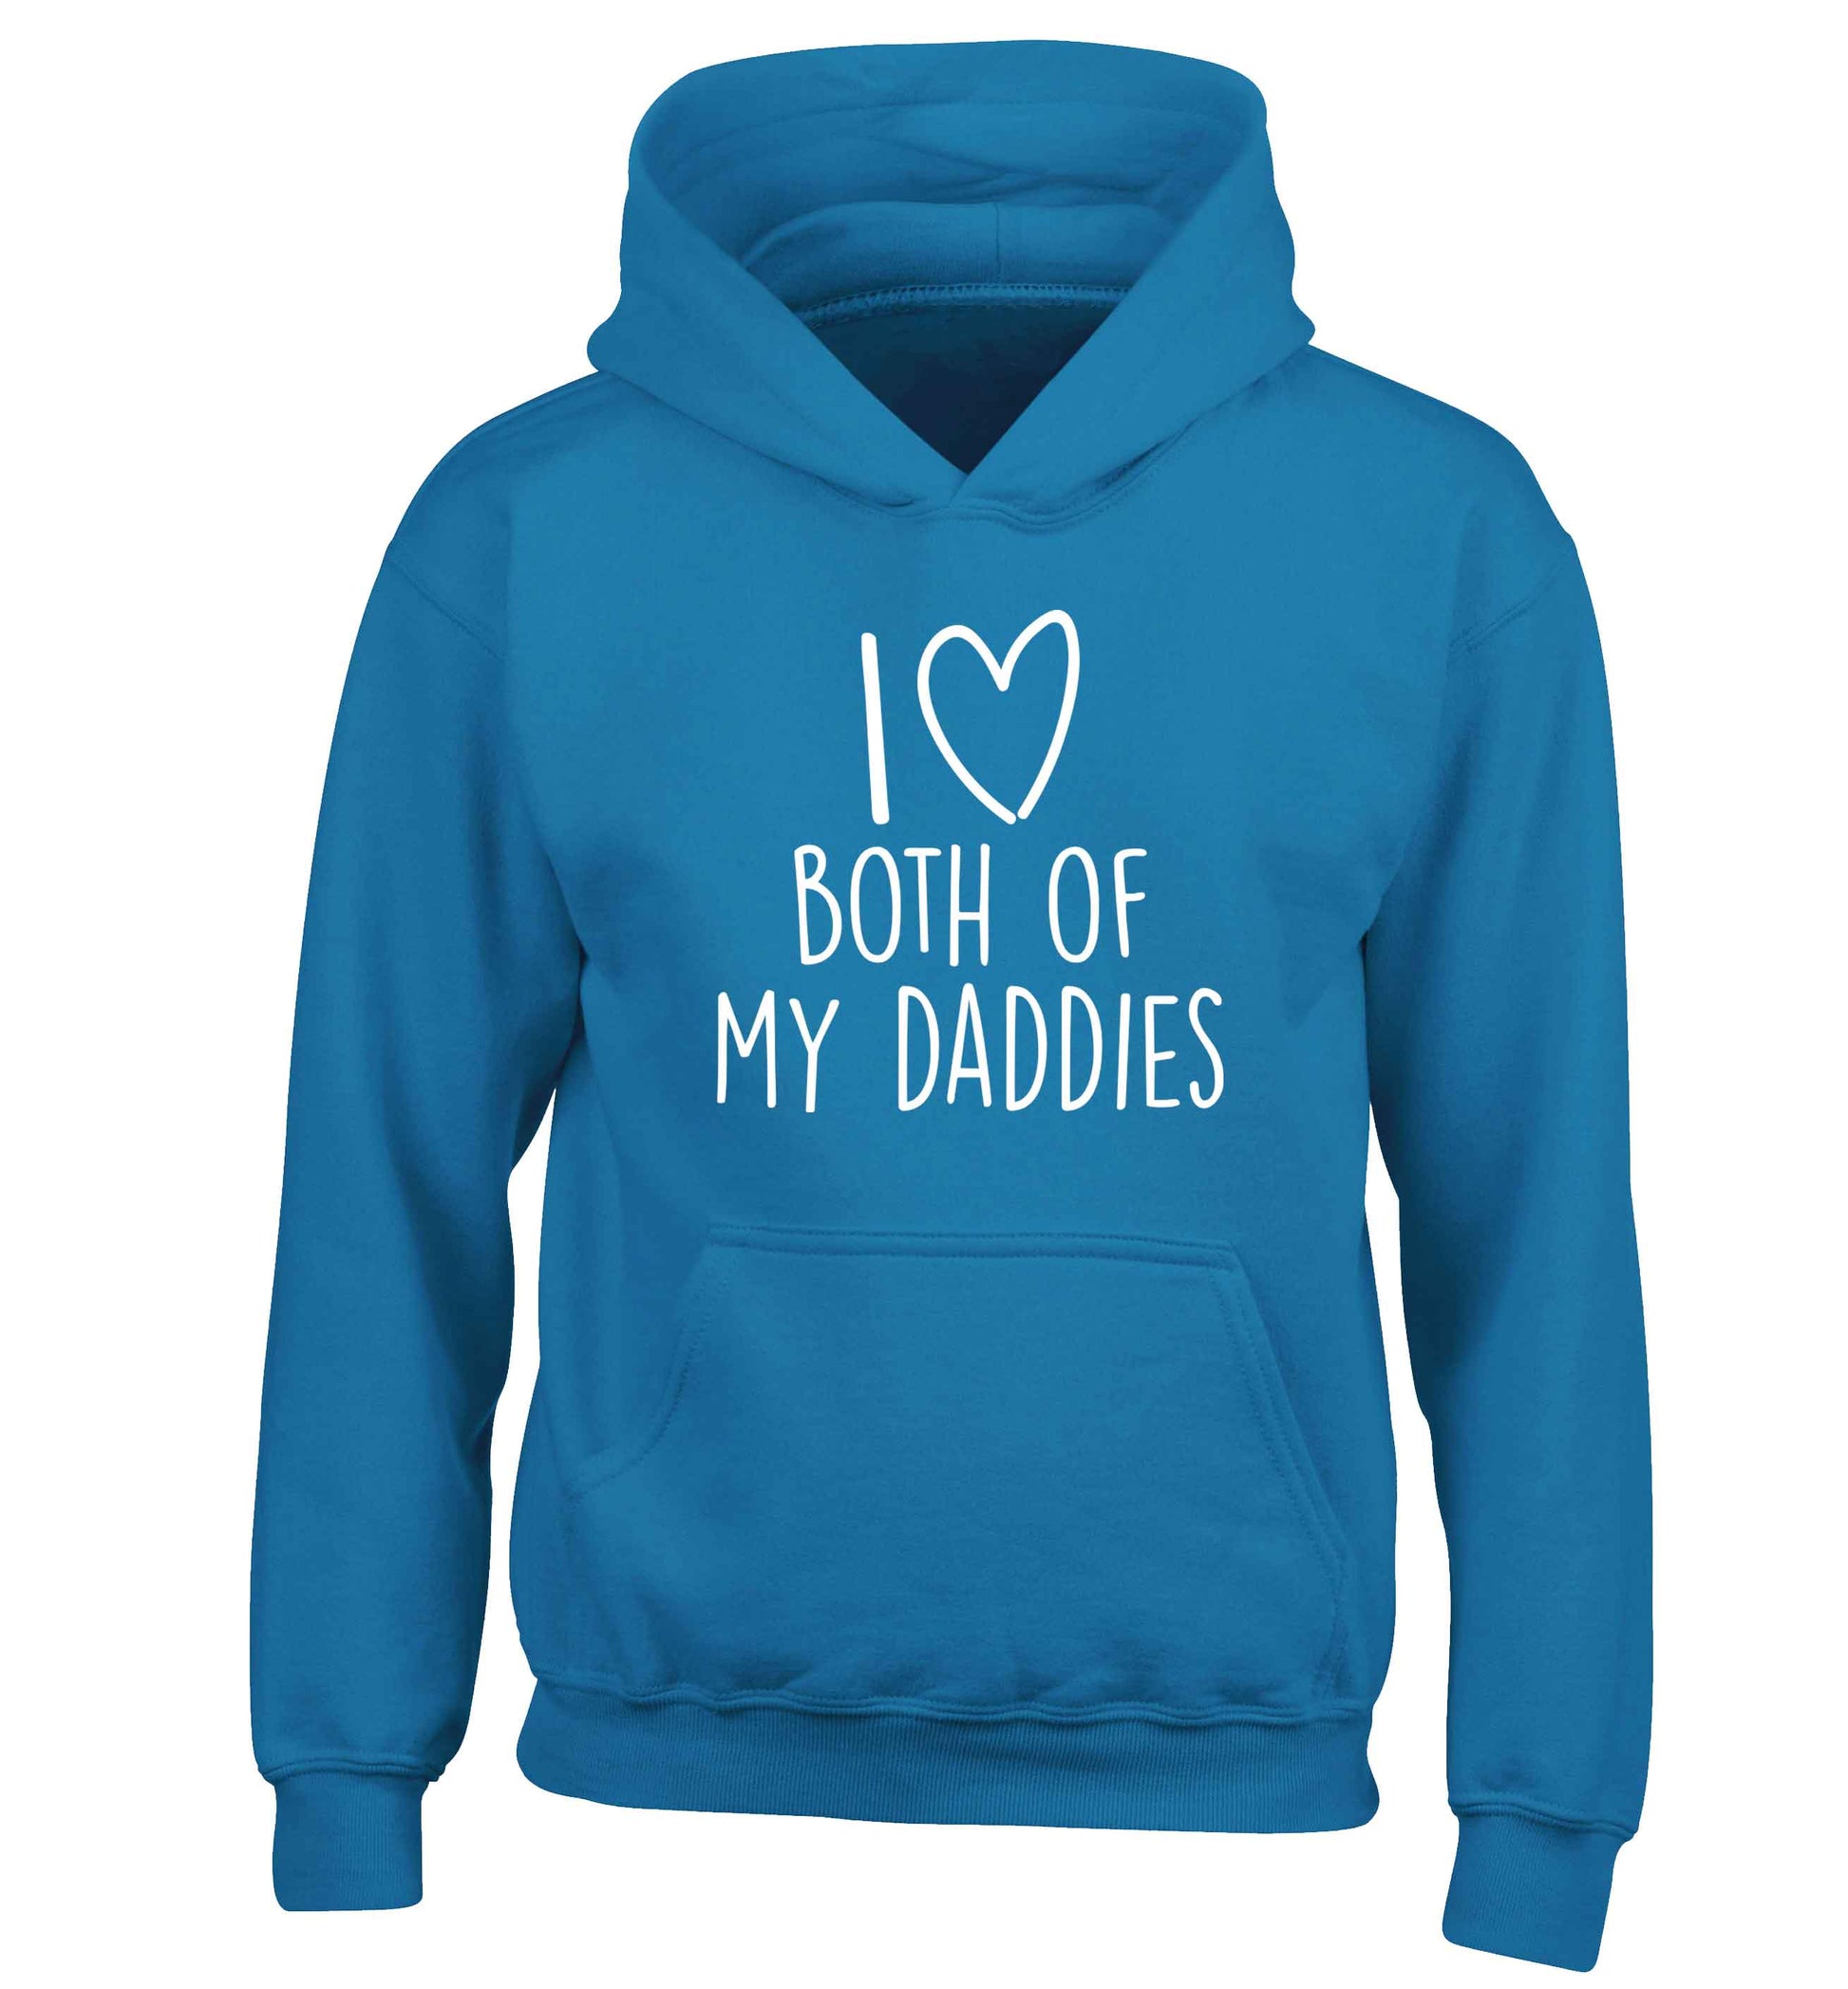 I love both of my daddies children's blue hoodie 12-13 Years